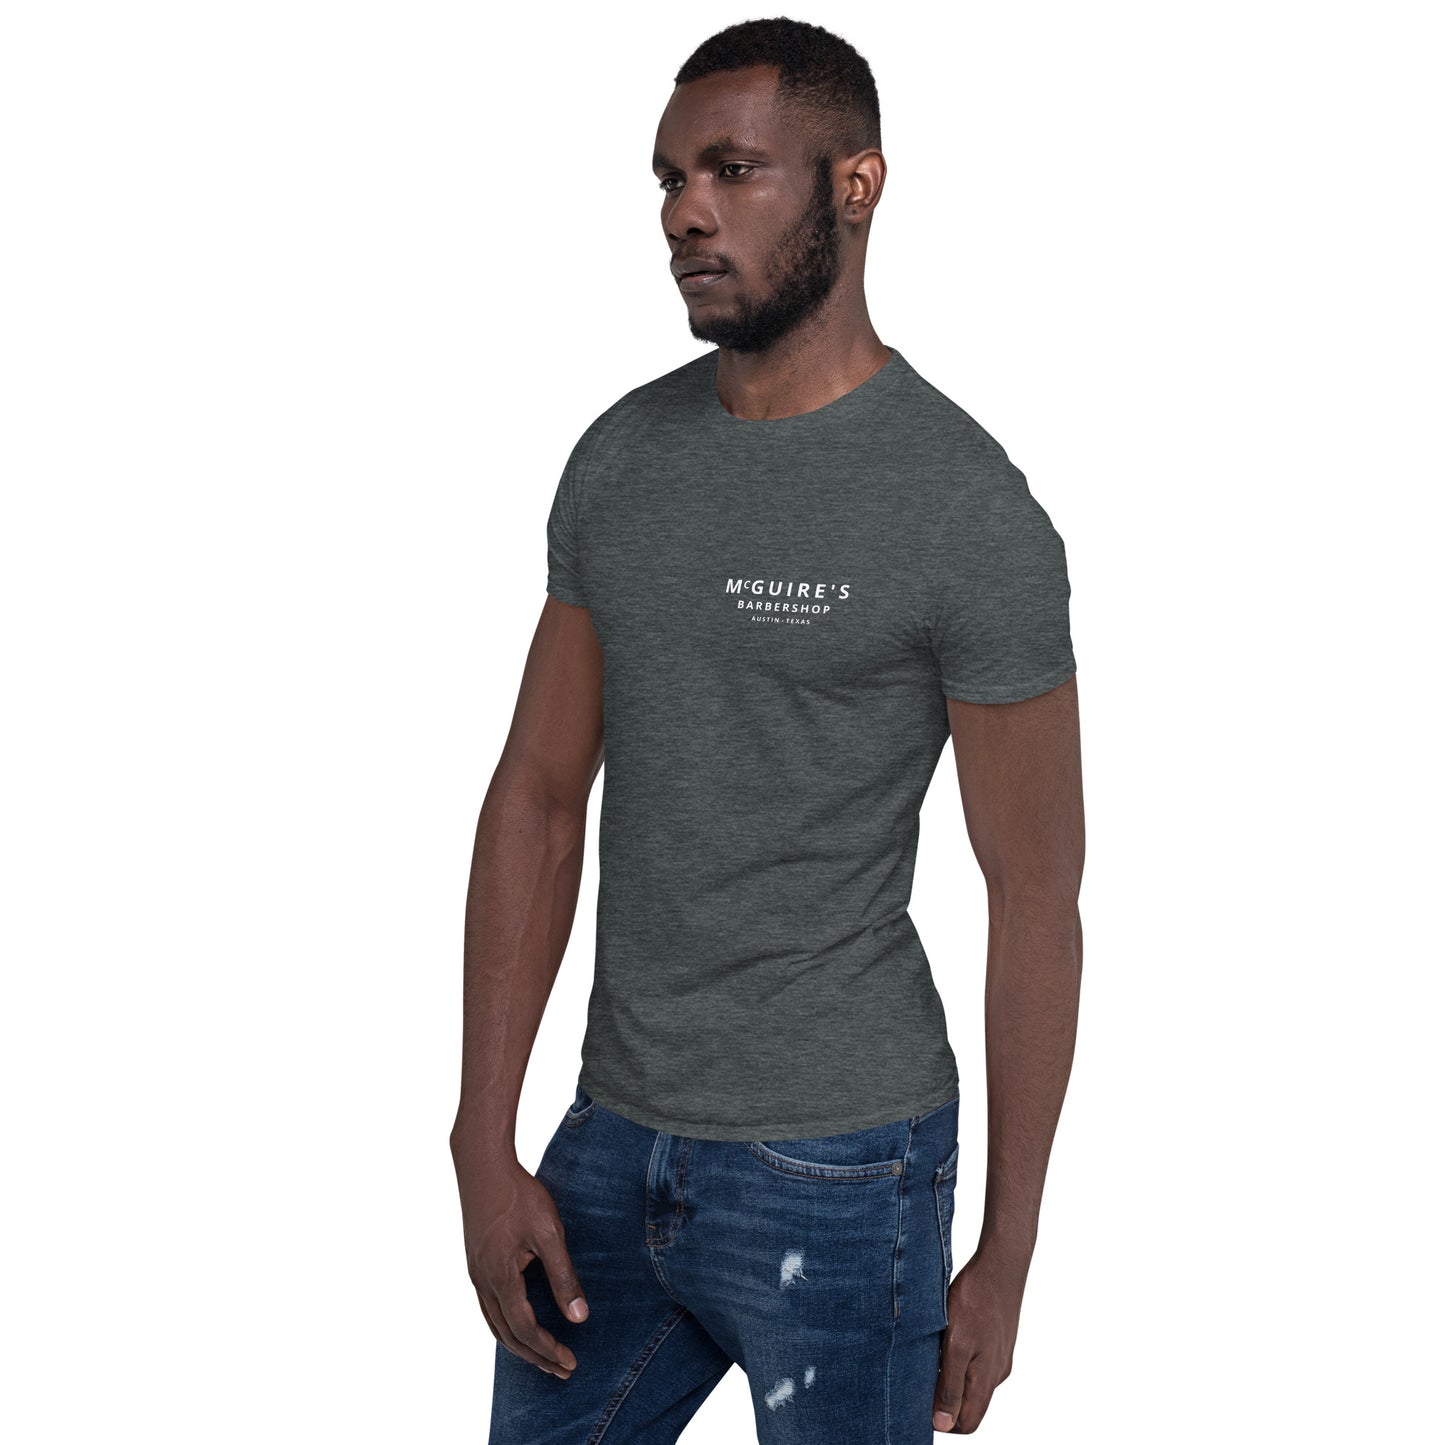 PANTHER Short-Sleeve Unisex T-Shirt